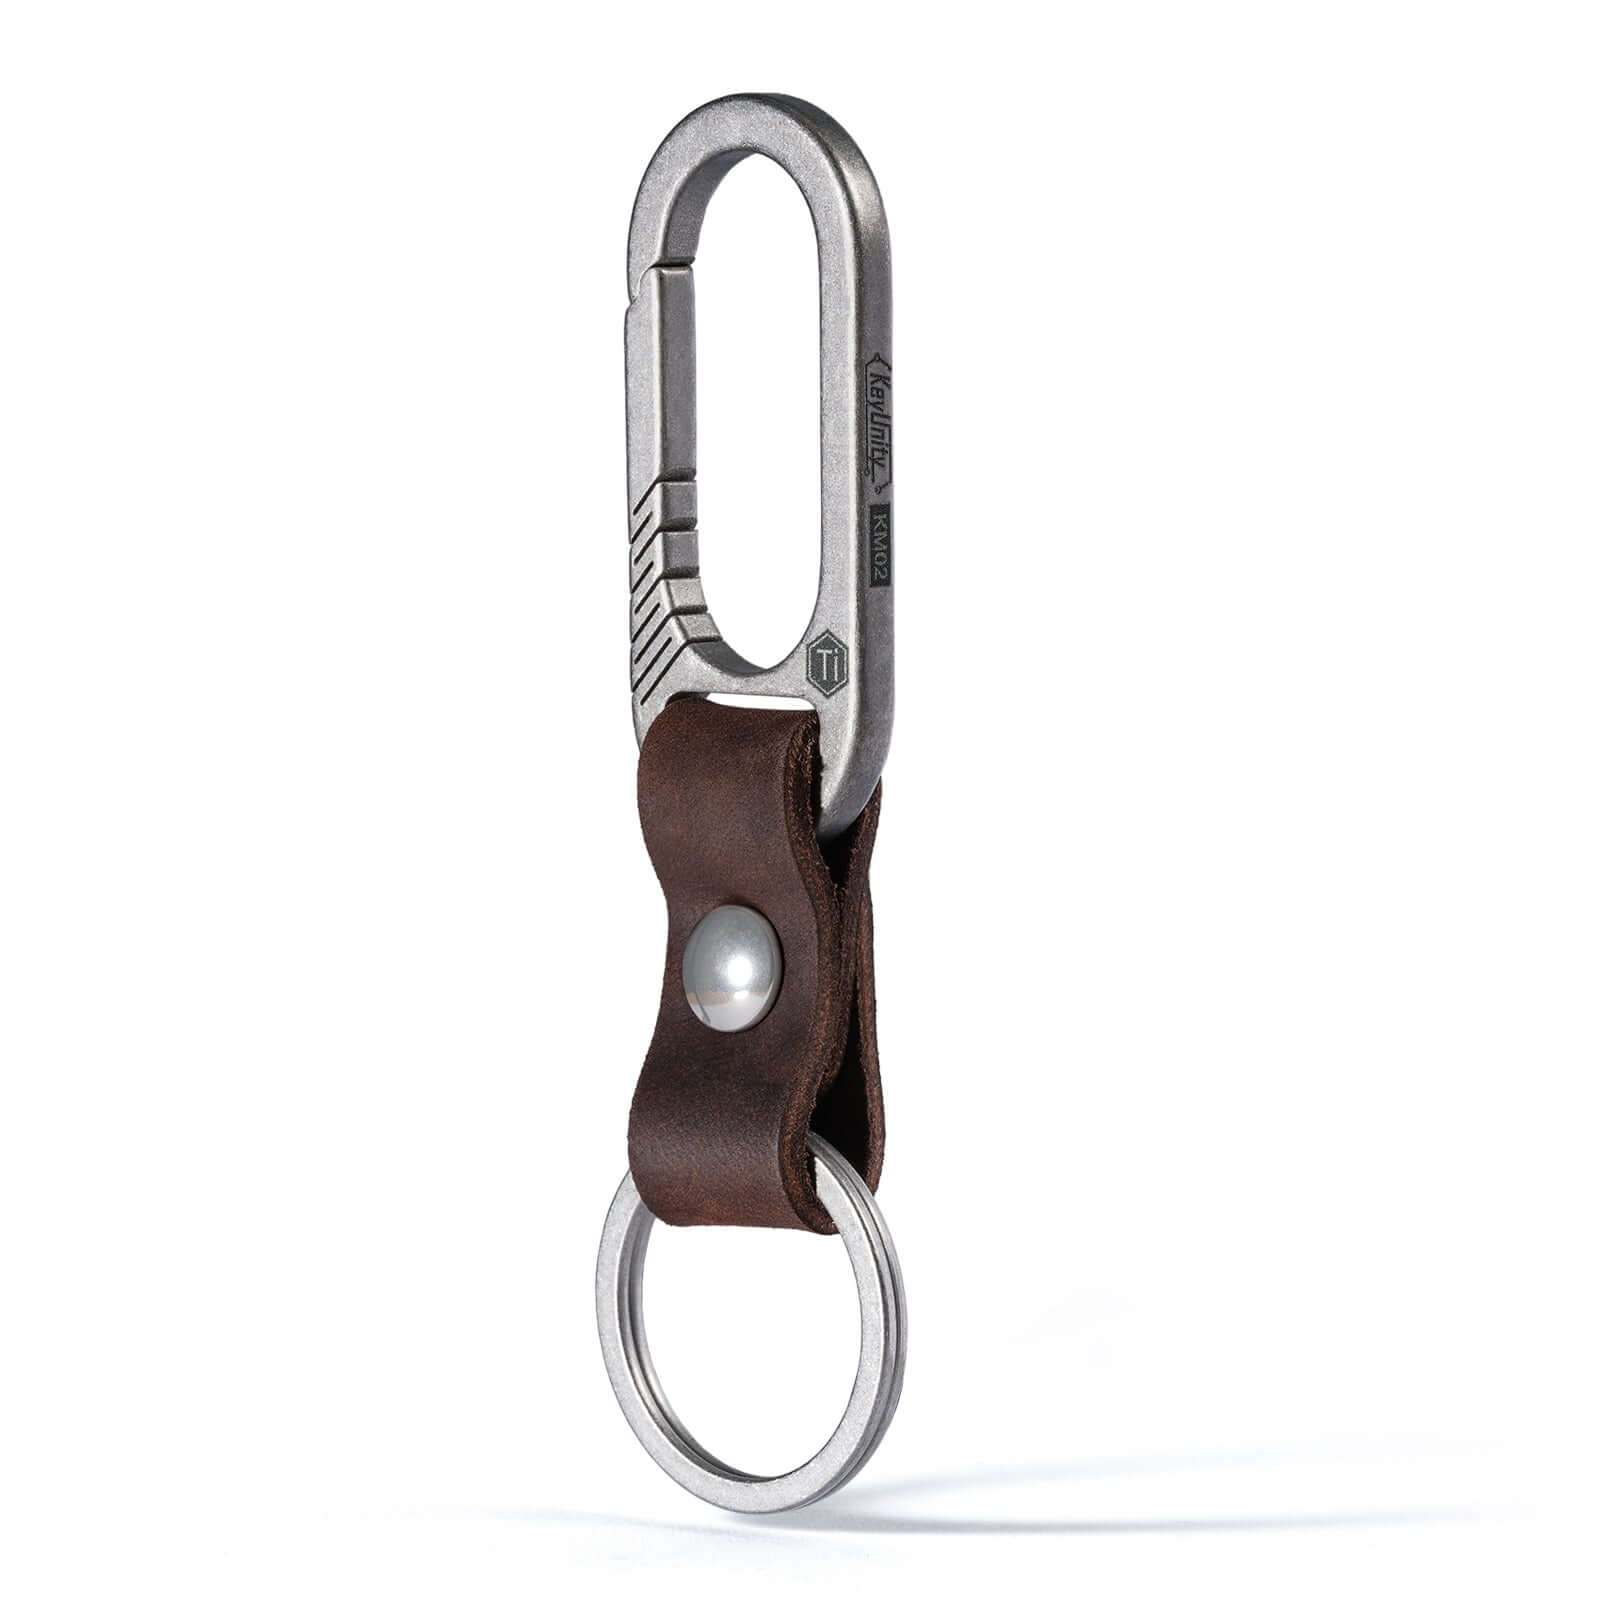 KeyUnity KM02 Titanium Alloy Keychain Clip with Leather